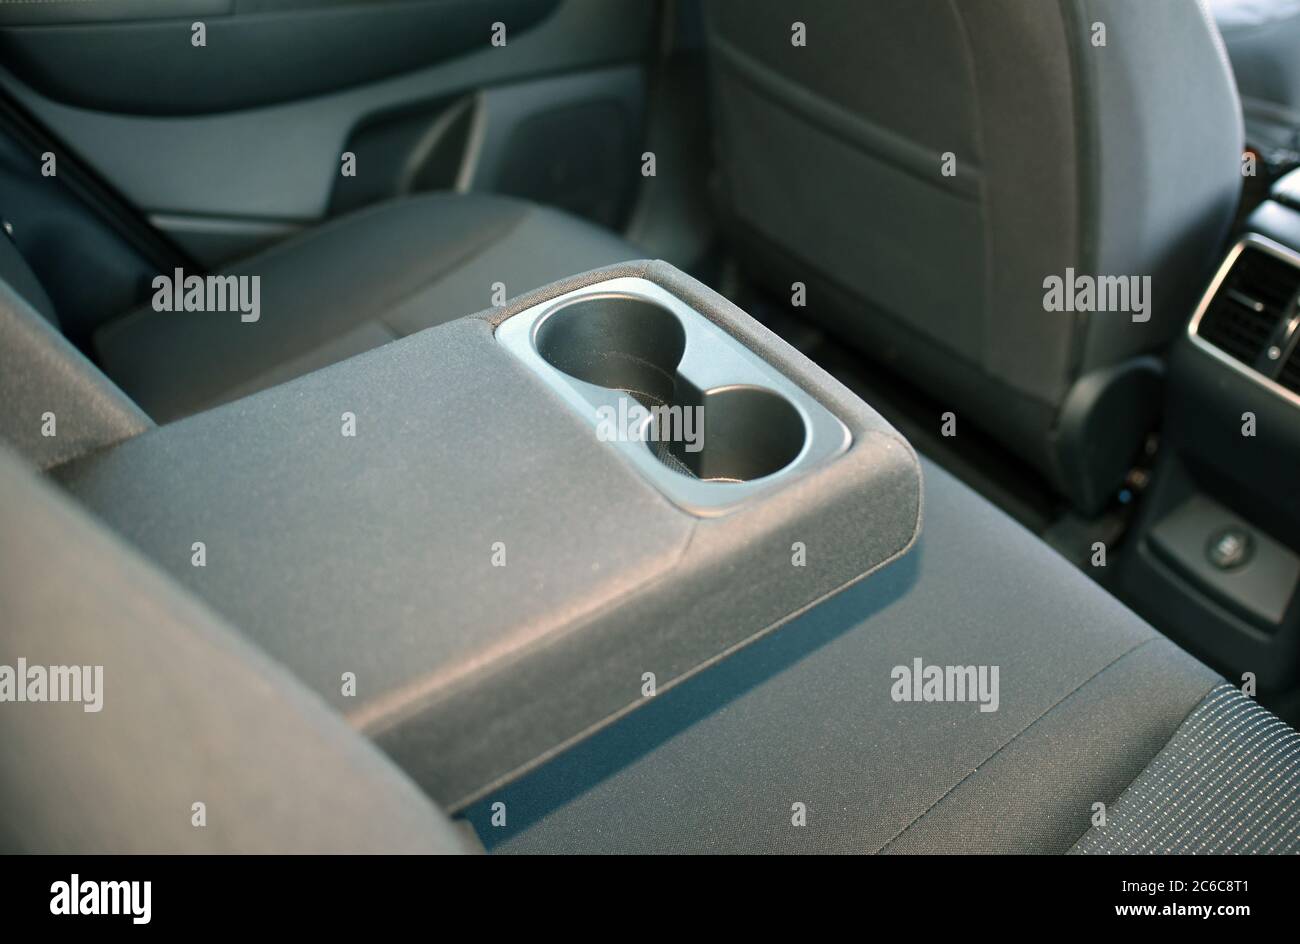 Armlehne im Auto für den Fahrer. Armlehne des Autos Stockfotografie - Alamy